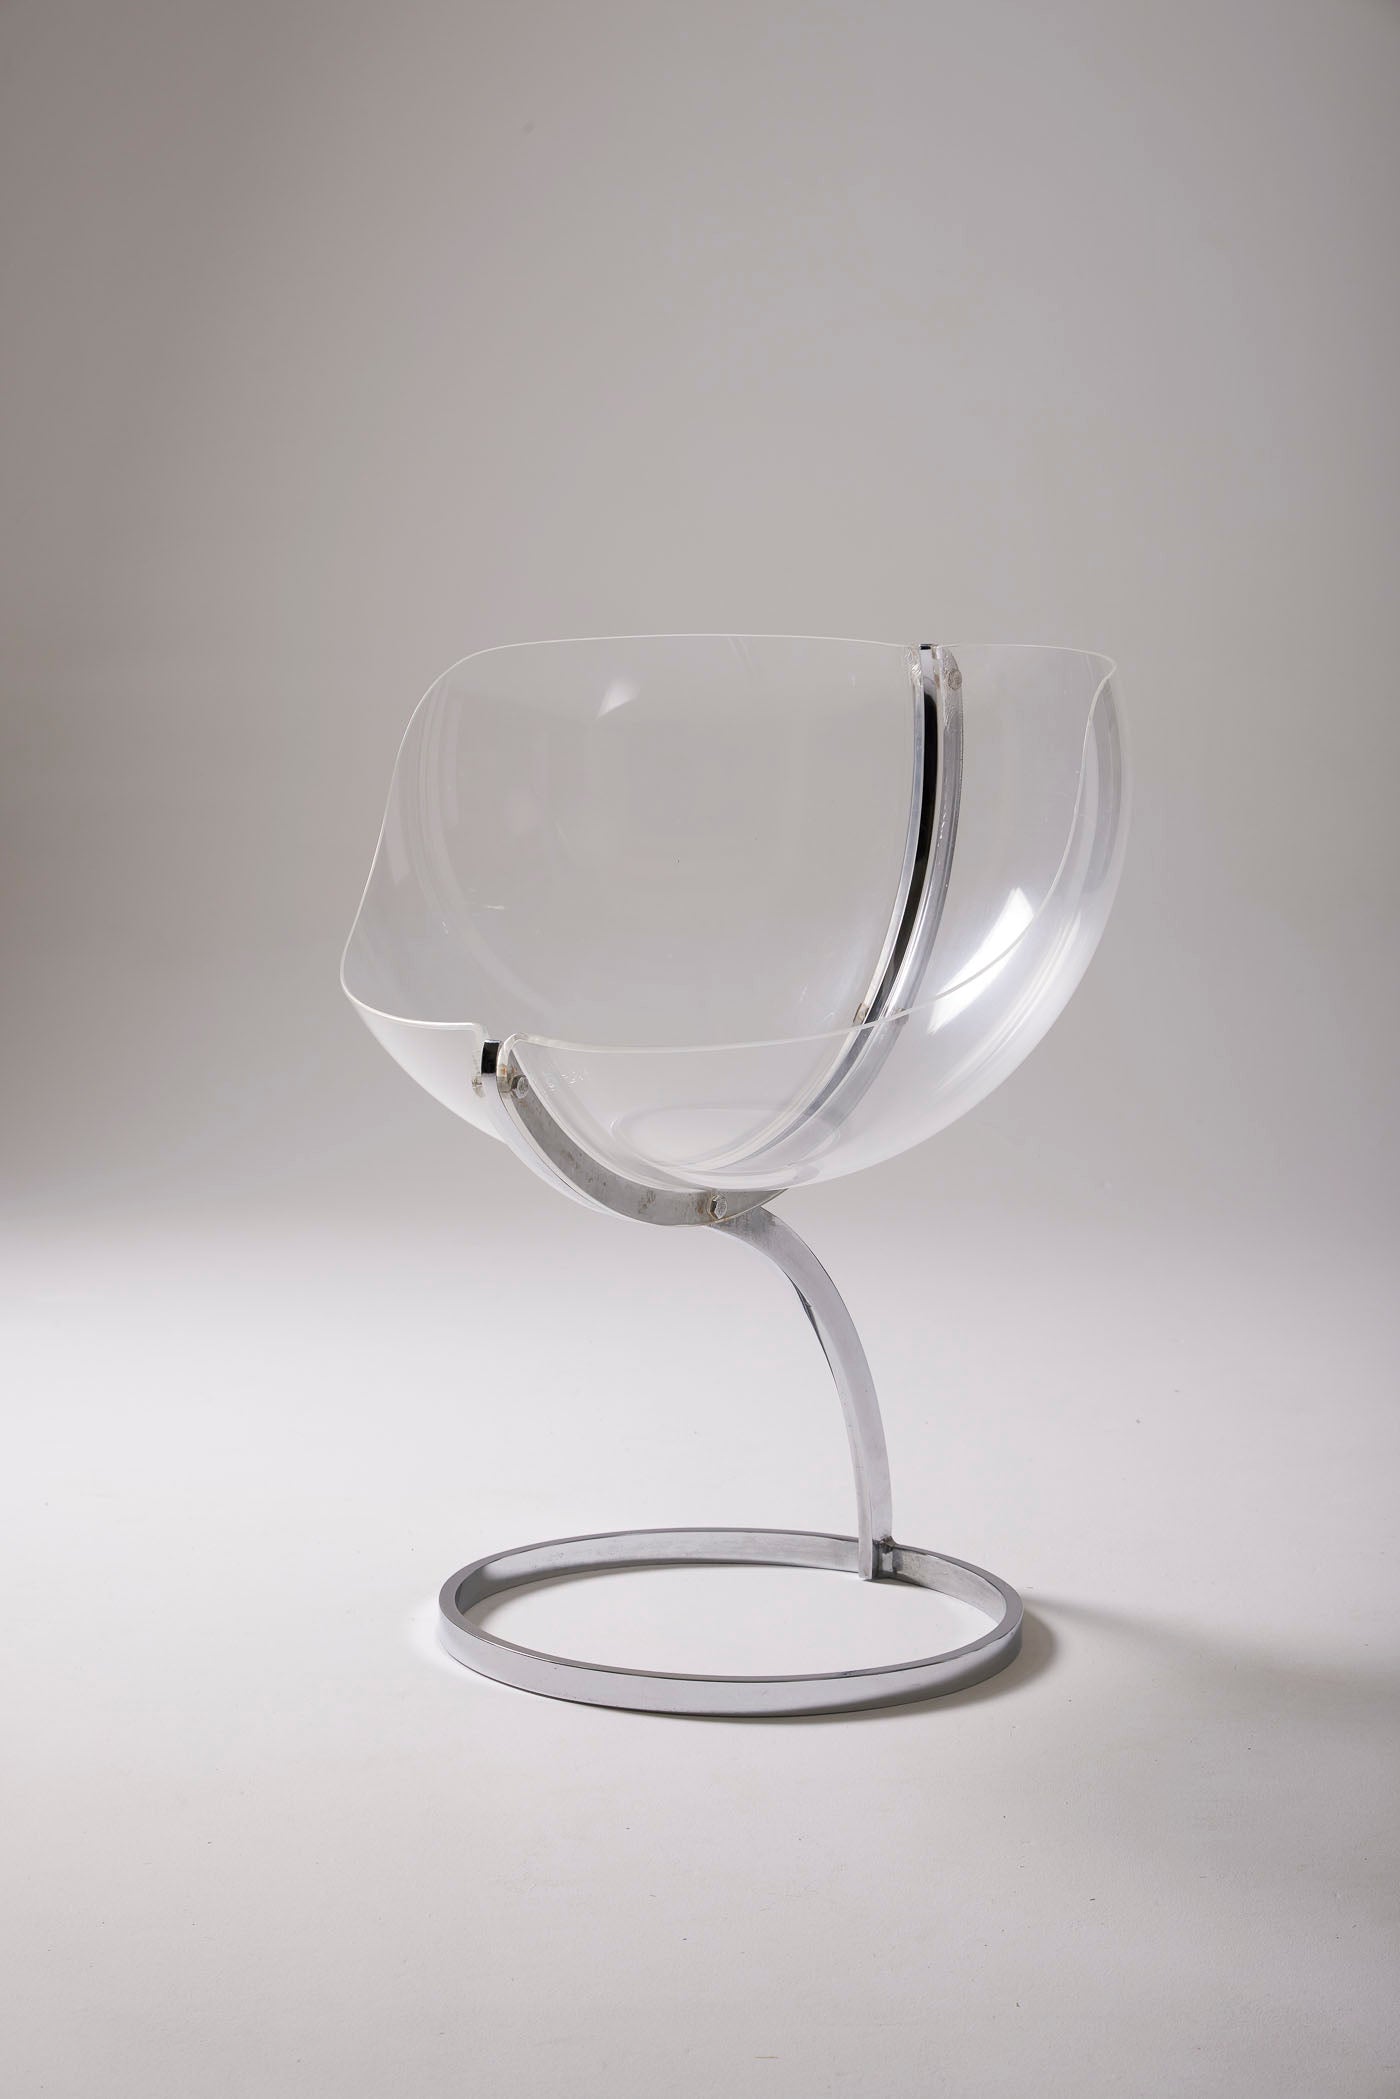 Boris Tabacoff Sphere Chair